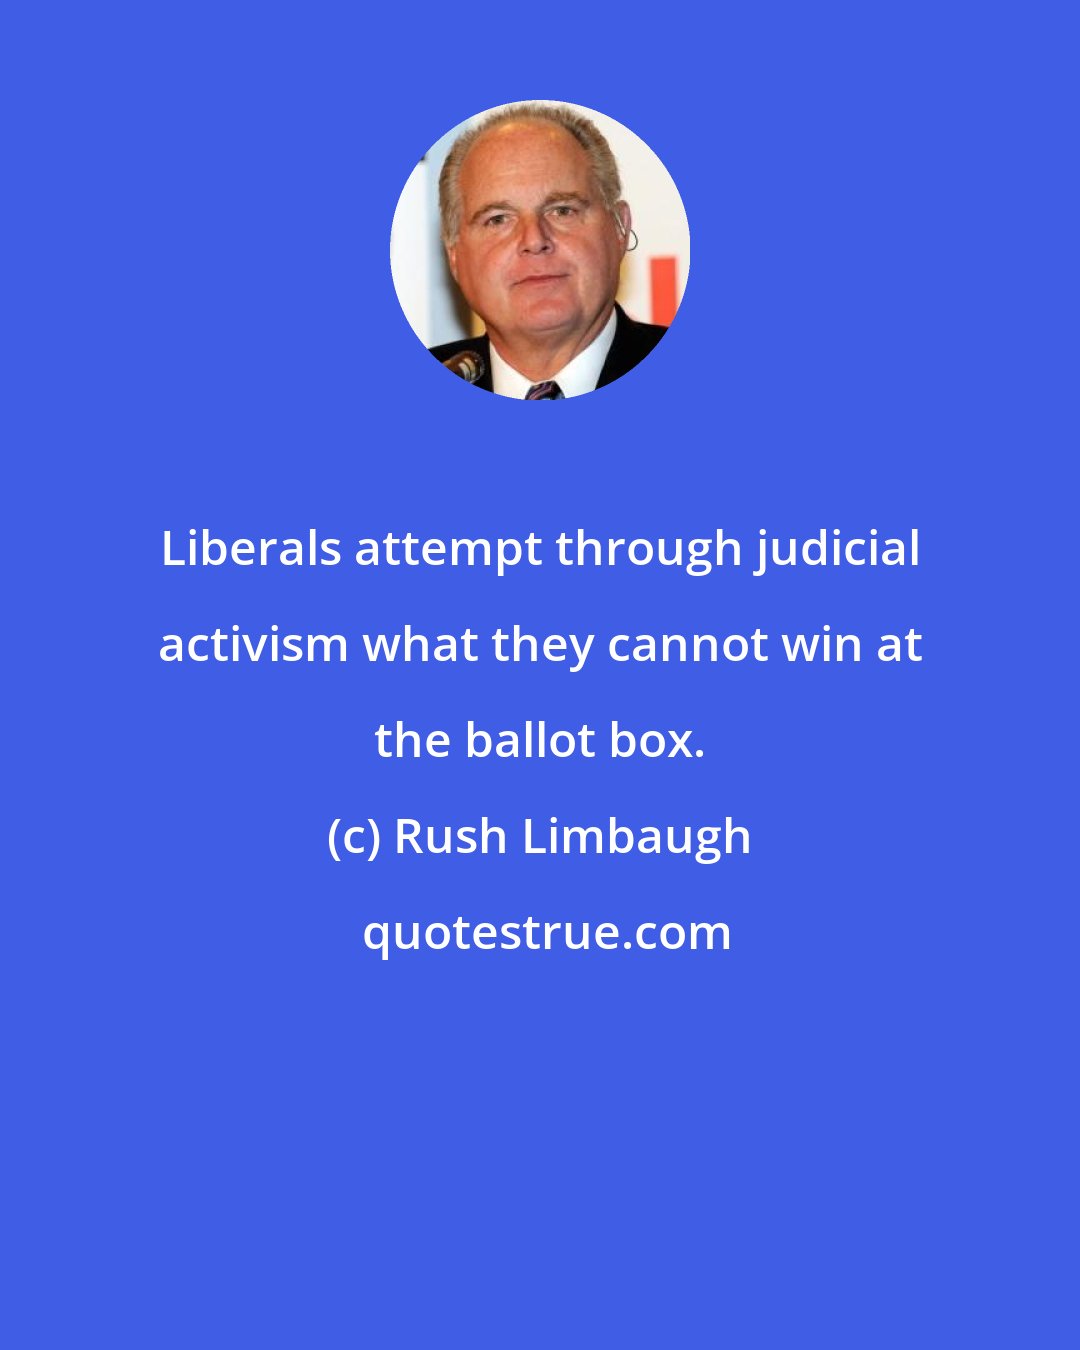 Rush Limbaugh: Liberals attempt through judicial activism what they cannot win at the ballot box.